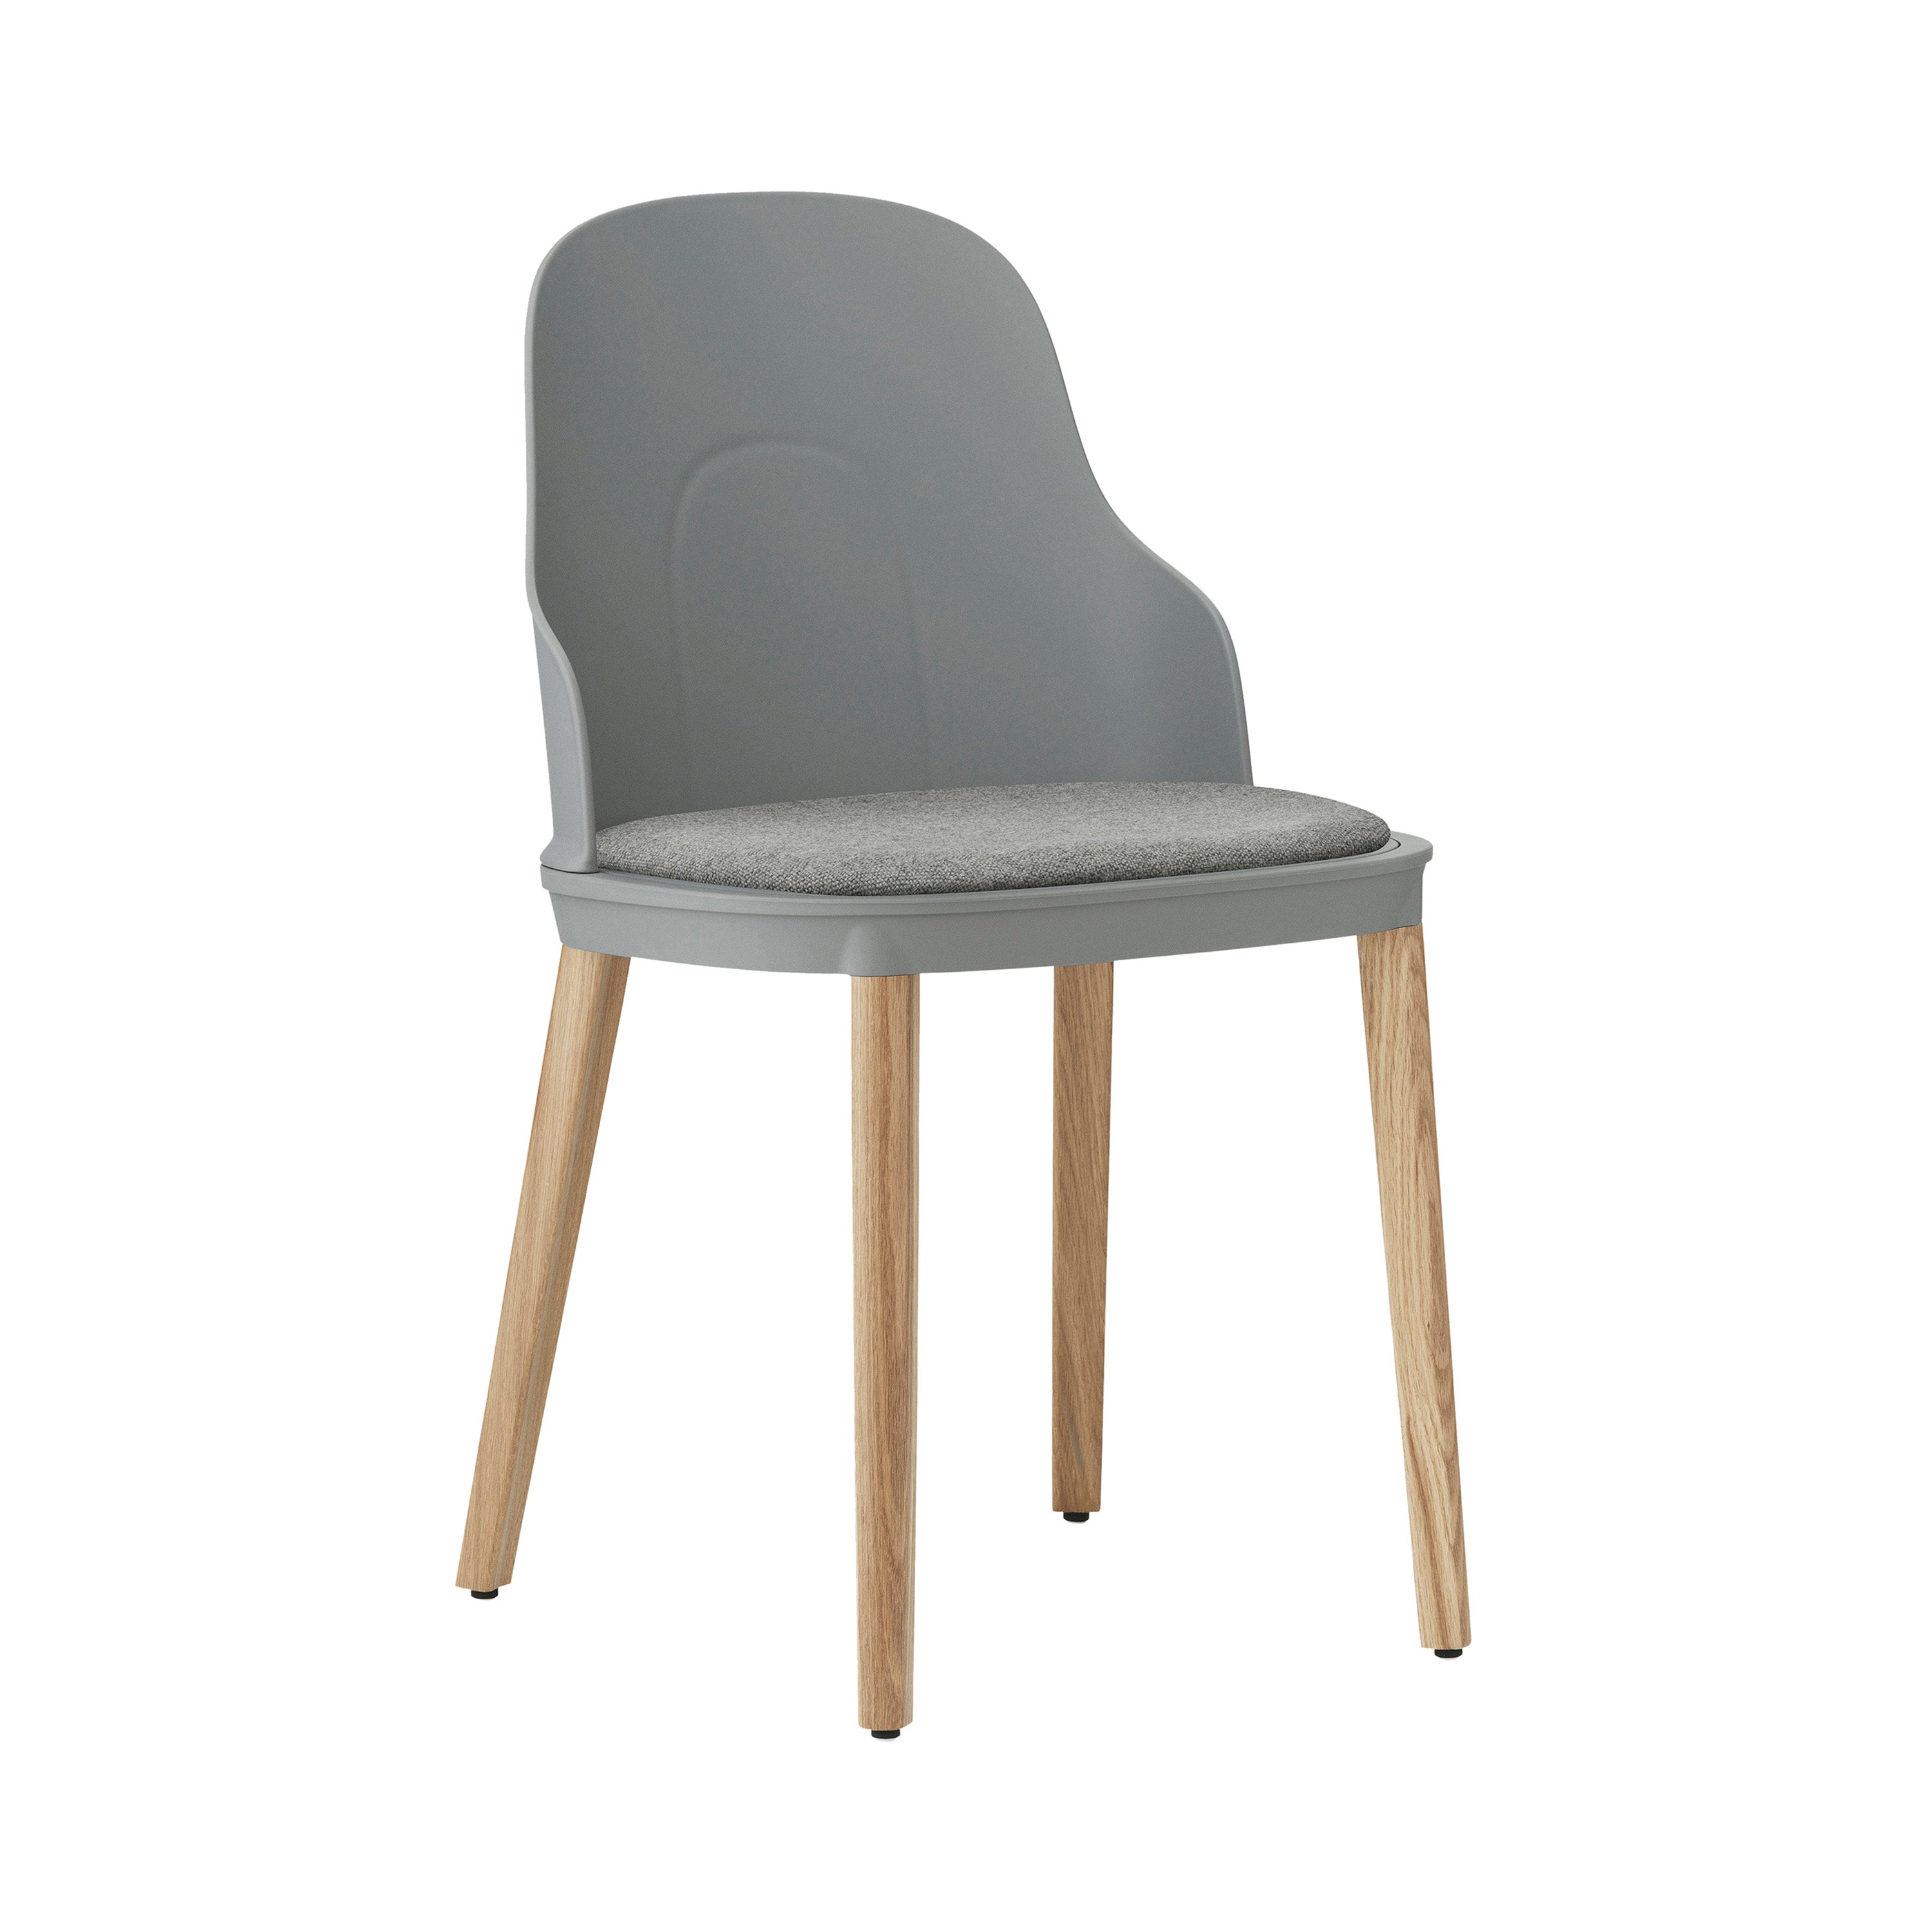 Allez Chair: Upholstered + Grey + Oak